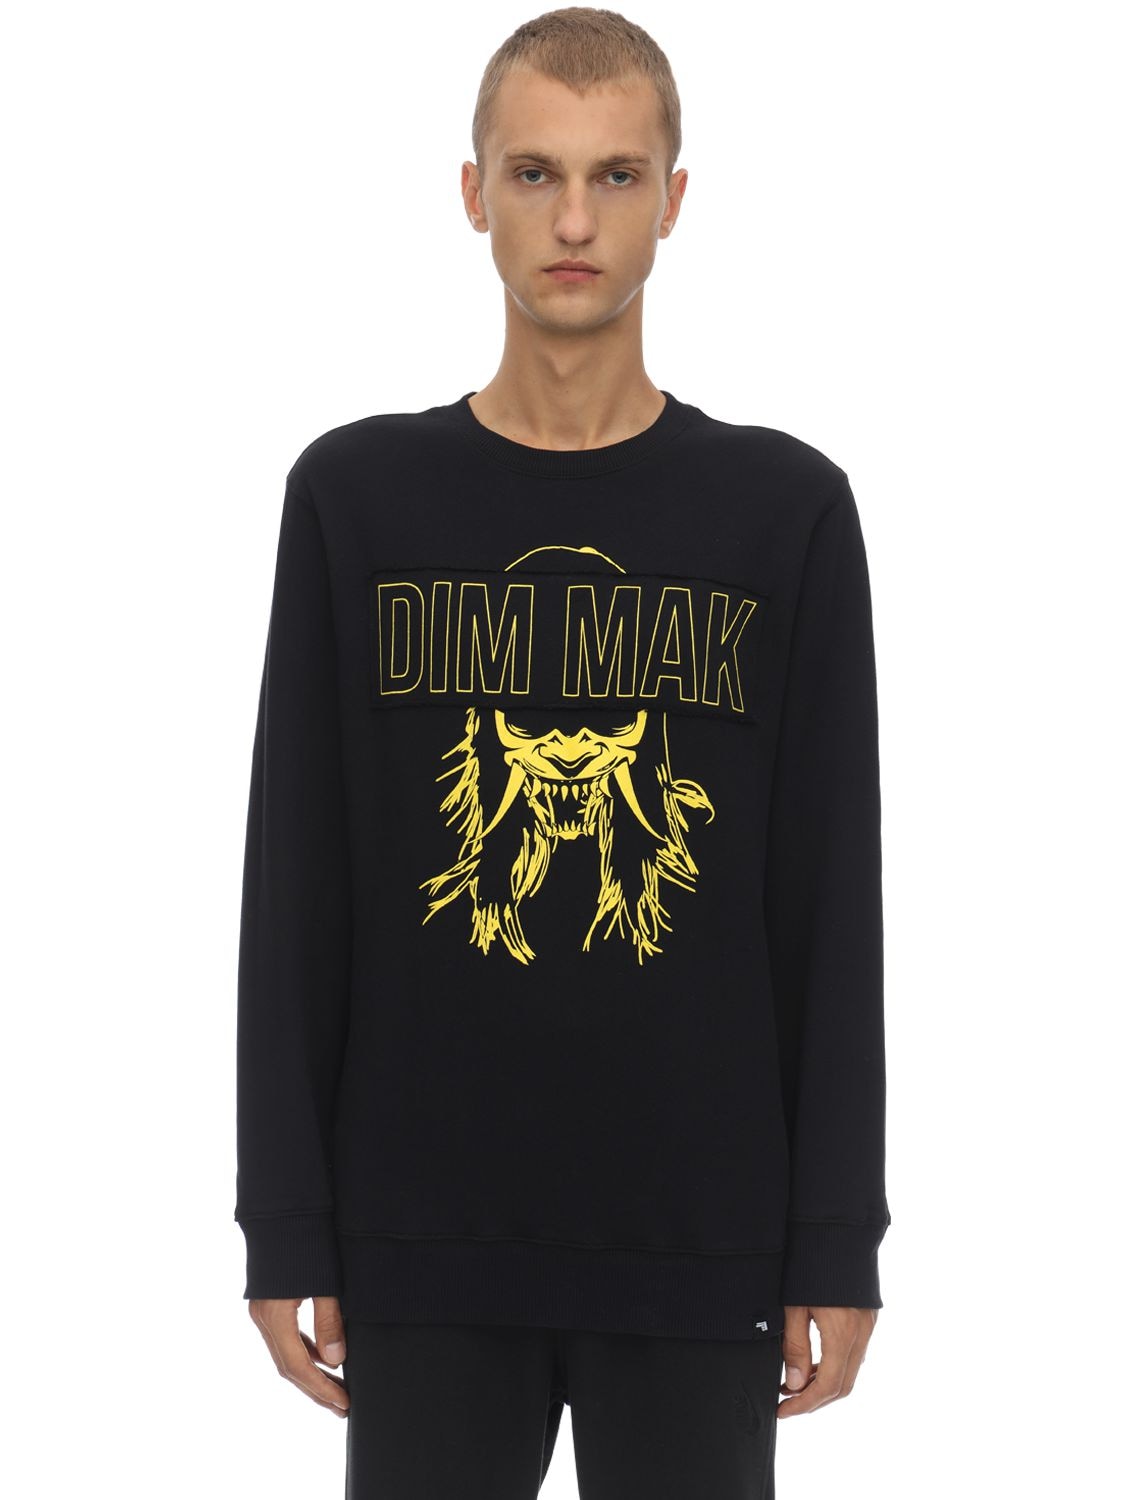 Dim Mak Collection “dim Mak Demon Mask”纯棉卫衣 In Black